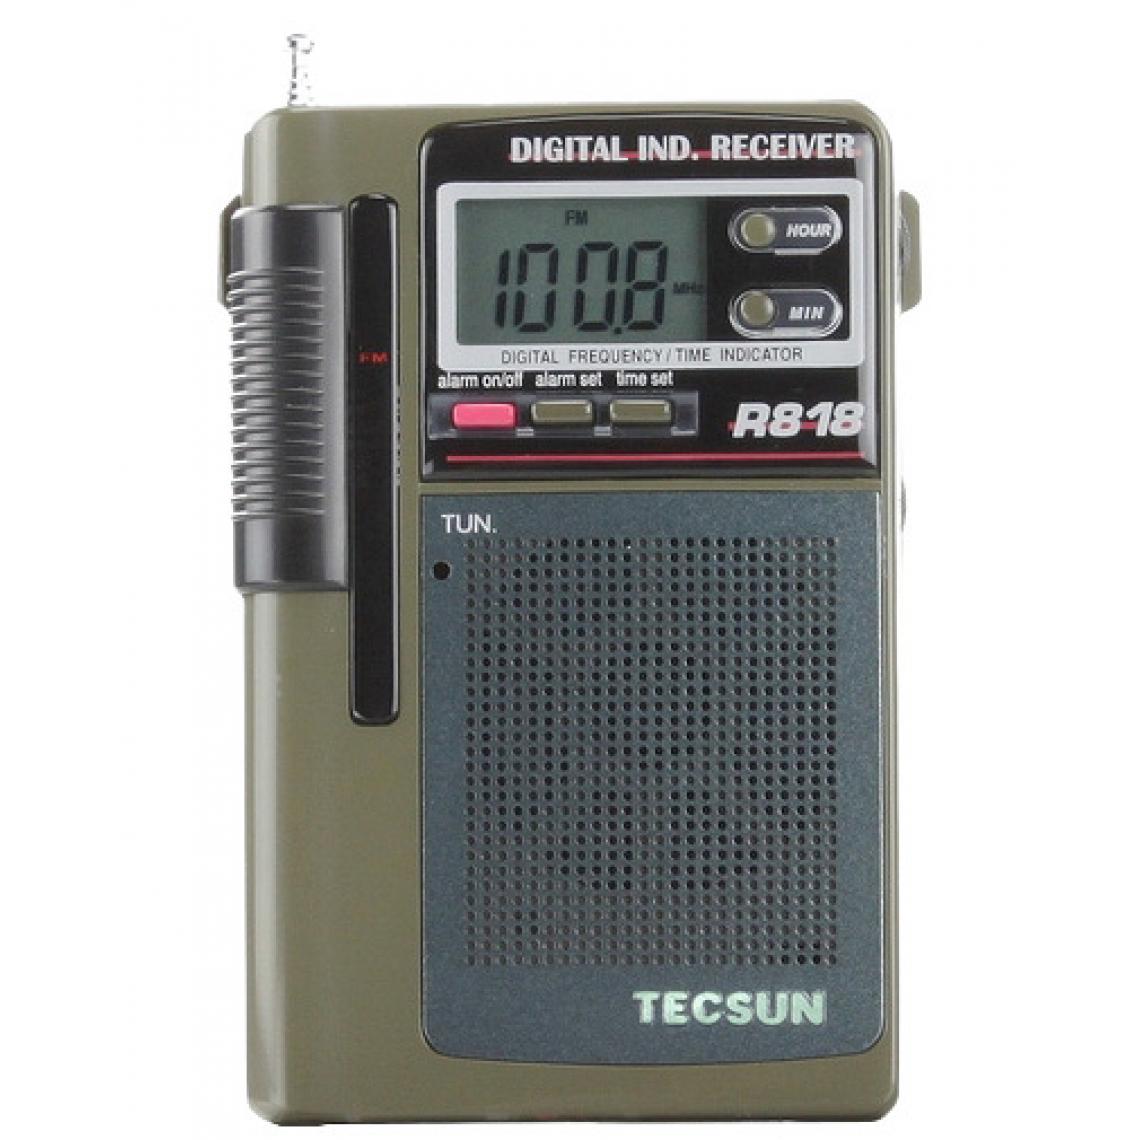 Universal - Qualité thermique 100% R 818 FM/MW/SW1 6 Horloge multibande R818 Radio Démodulation numérique Radio stéréo | Bouton radio dans la radio Radio radio stéréo(Le noir) - Radio